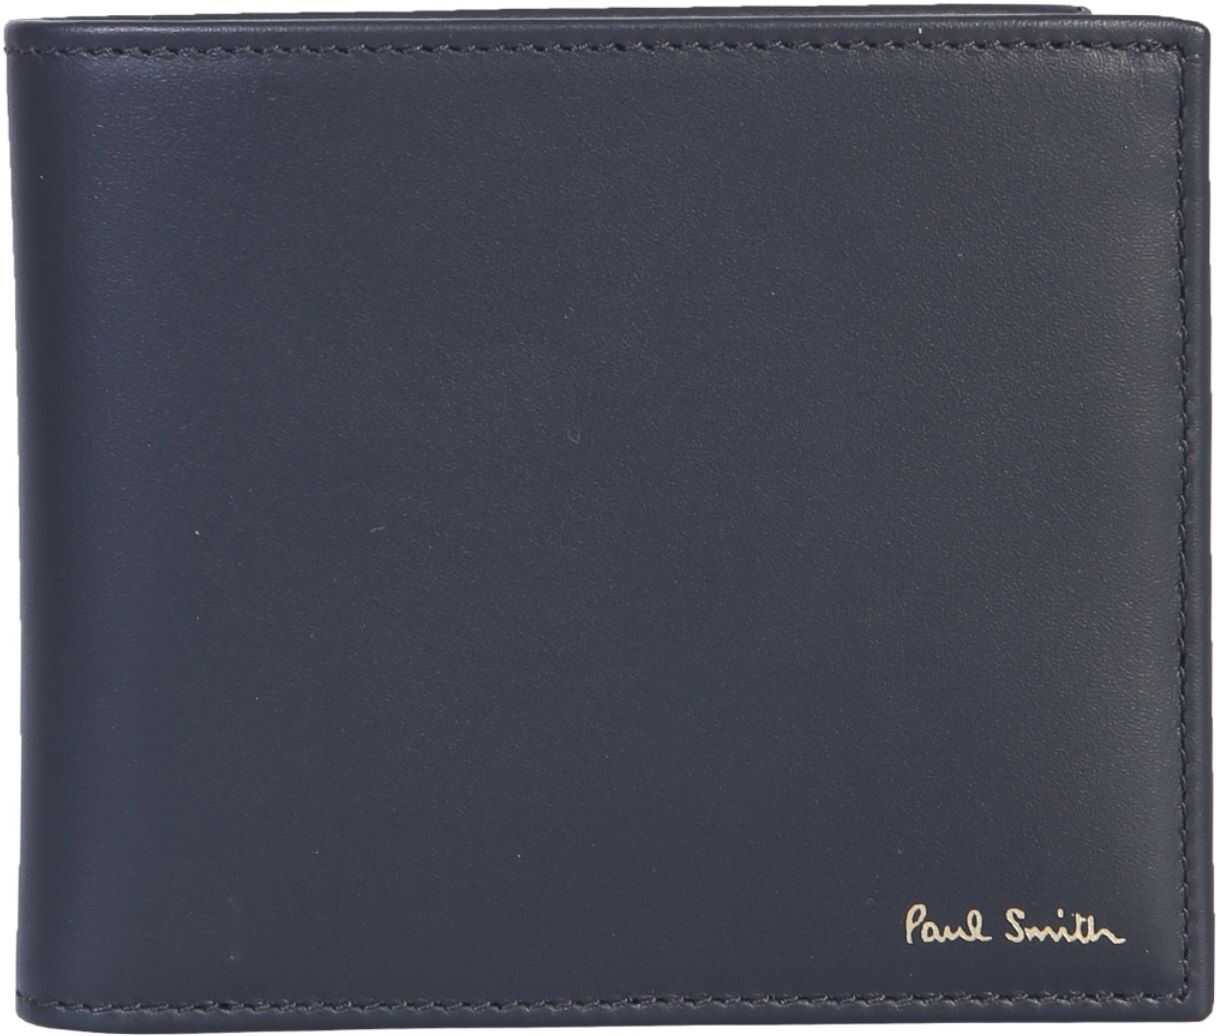 Paul Smith Gift Box BLACK